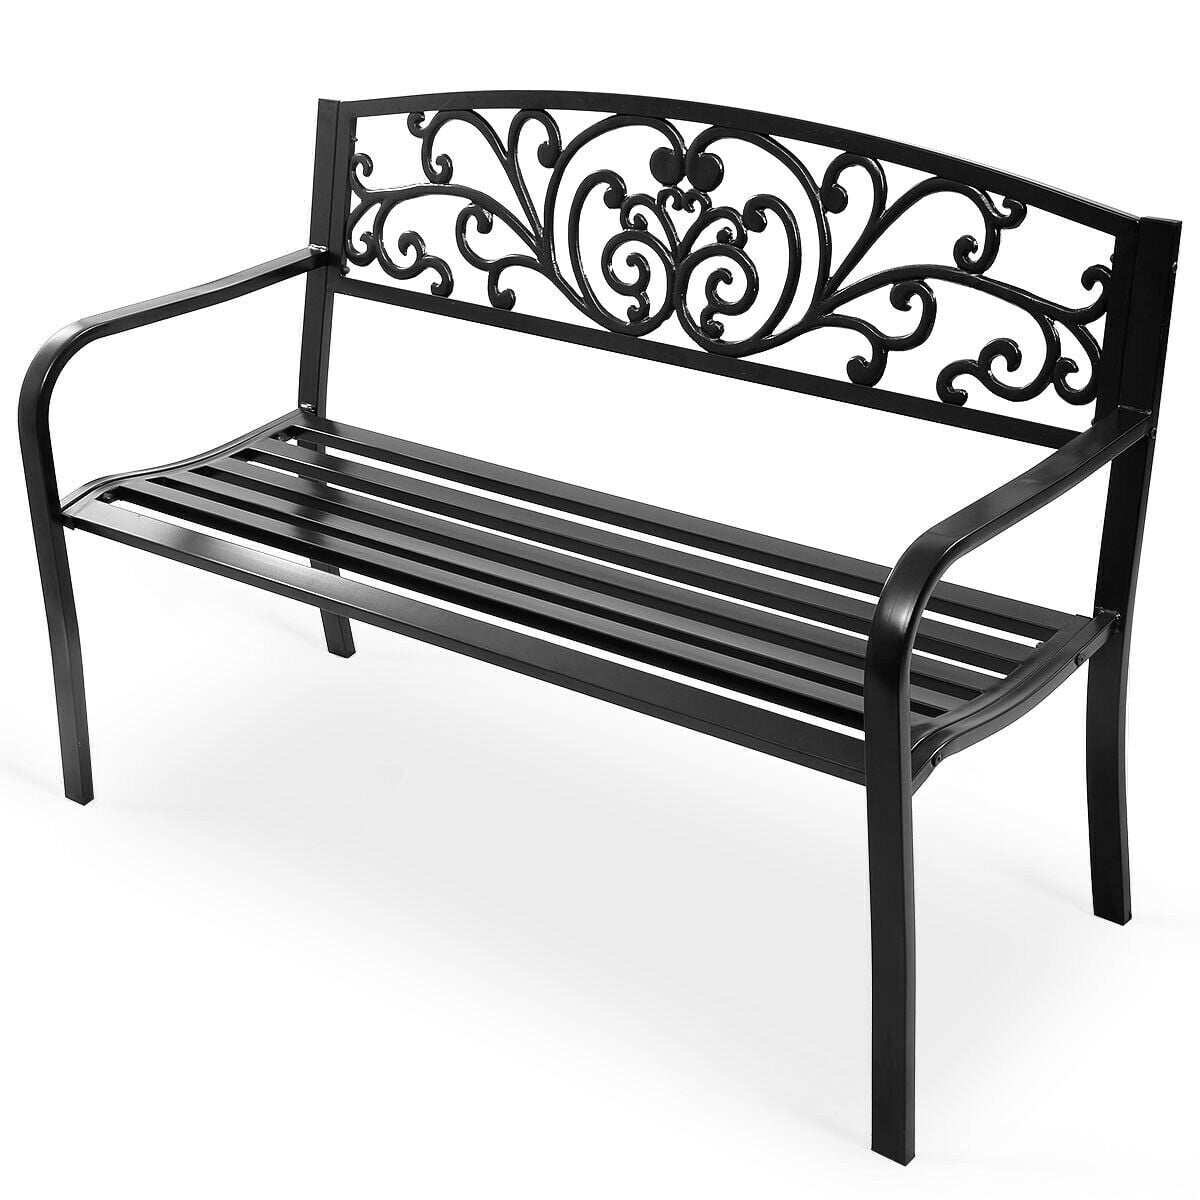 NEW 50" Outdoor Patio Porch Deck Hardwood Cast Iron Garden Bench Chair Love Seat 